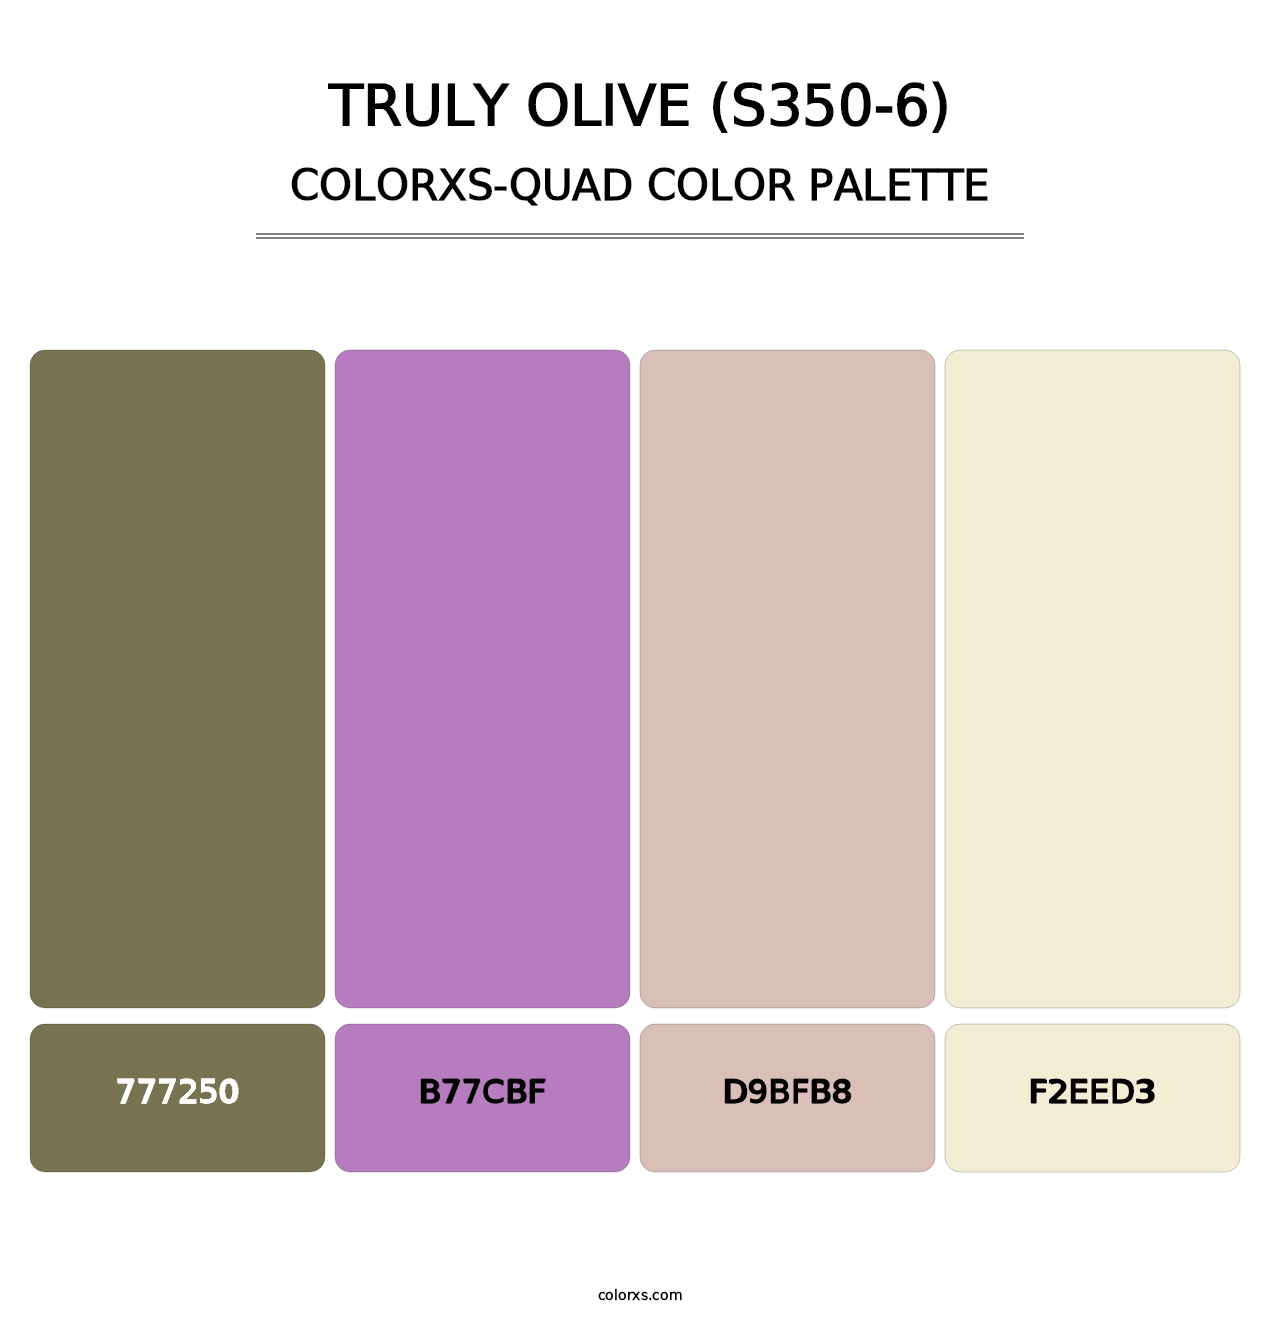 Truly Olive (S350-6) - Colorxs Quad Palette